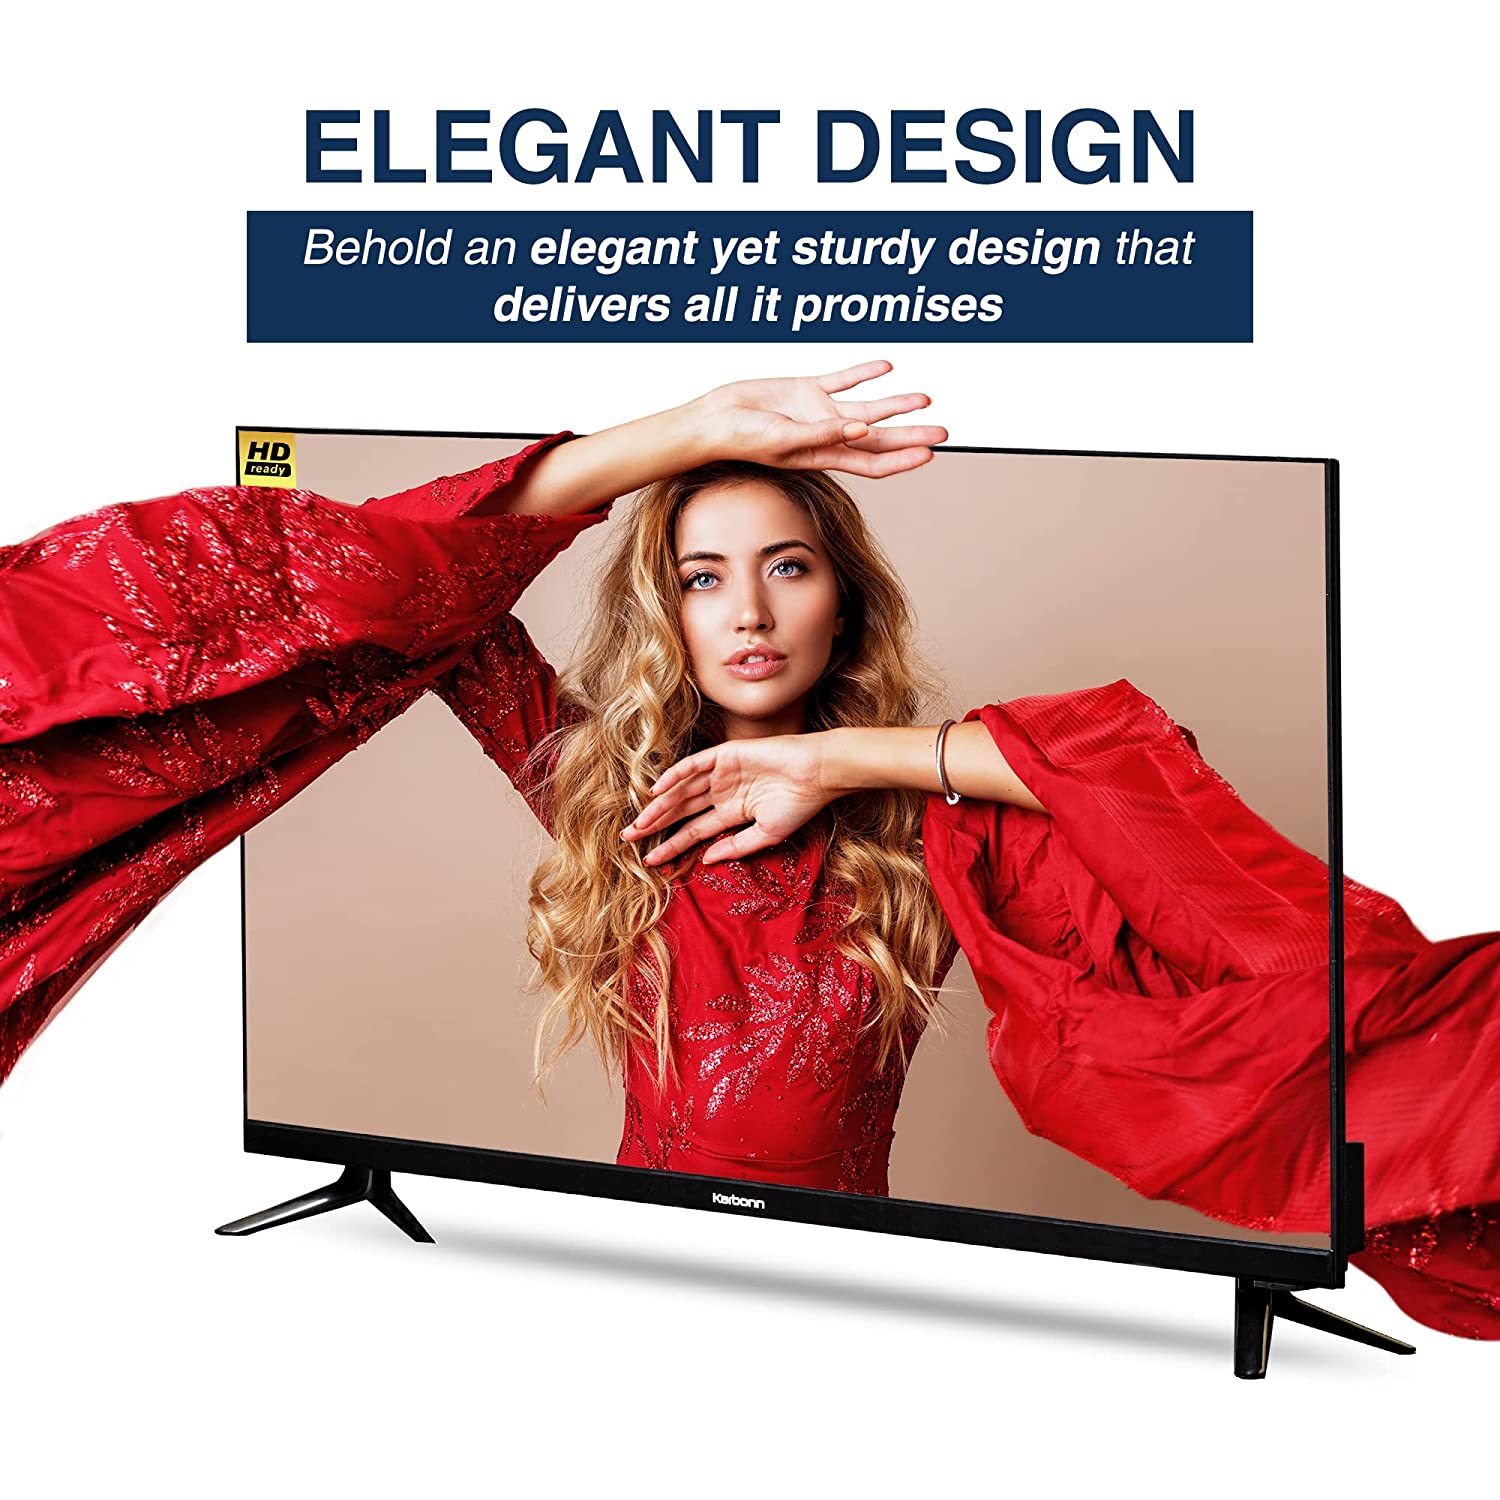 Karbonn 32-inch Millennium Series HD Smart TV launching on Amazon Prime Day